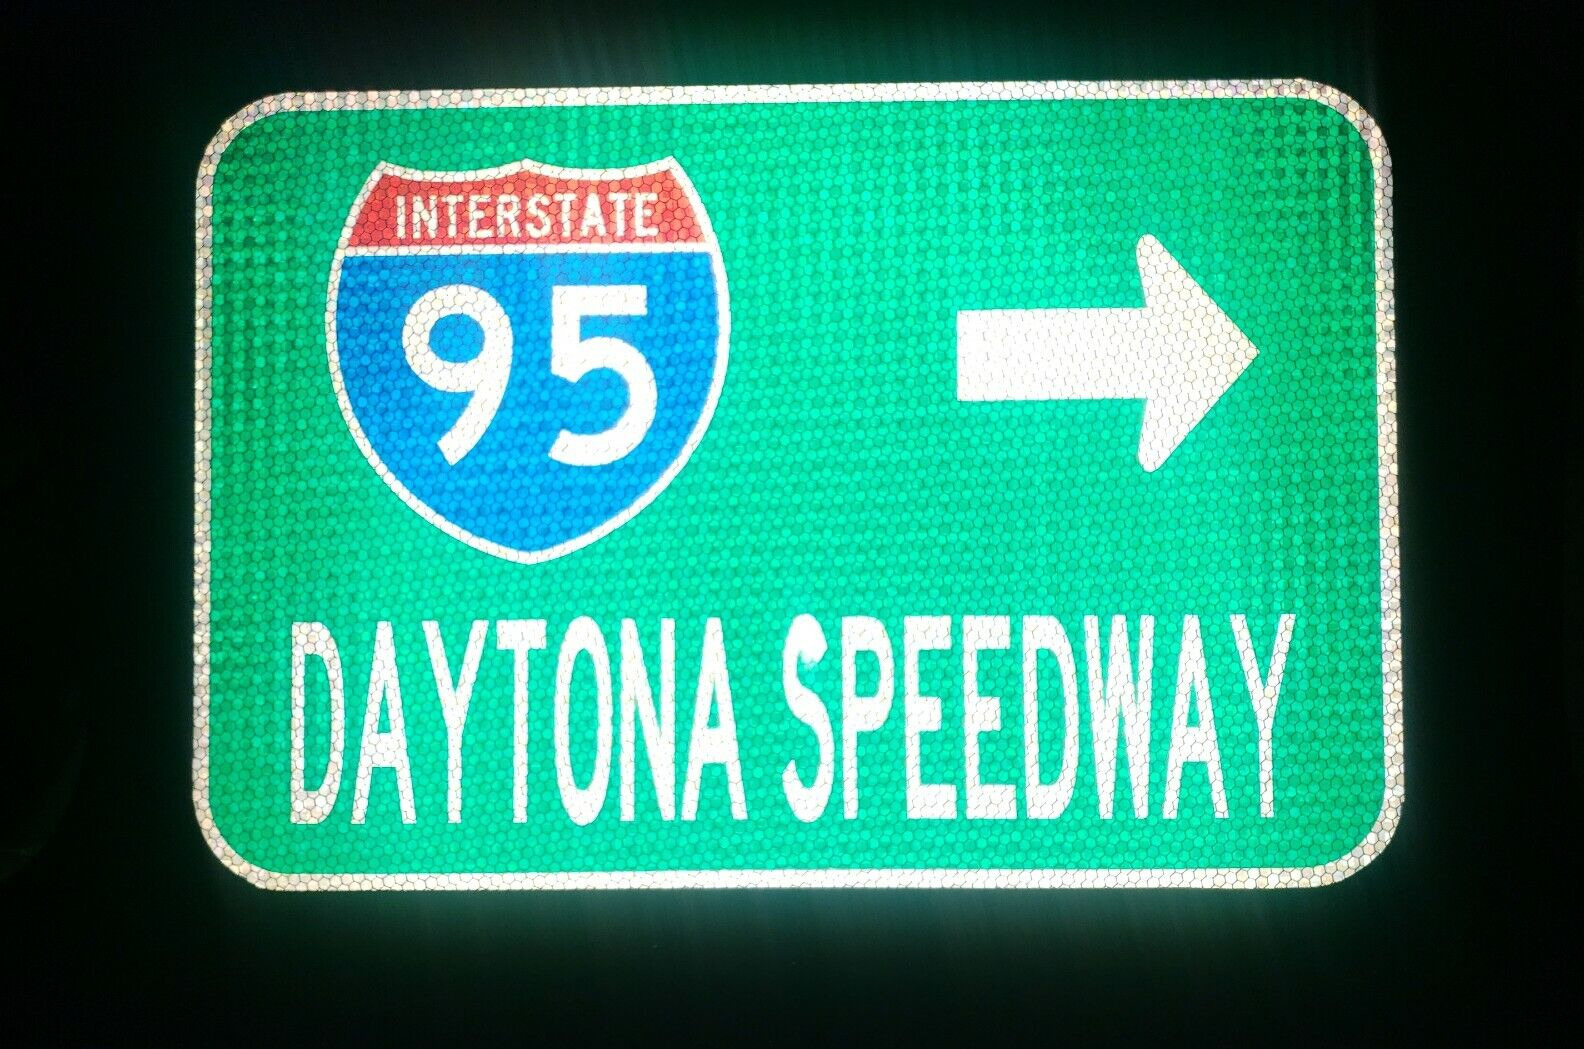 DAYTONA INTERNATIONAL SPEEDWAY route road sign, Florida, NASCAR, Daytona 500